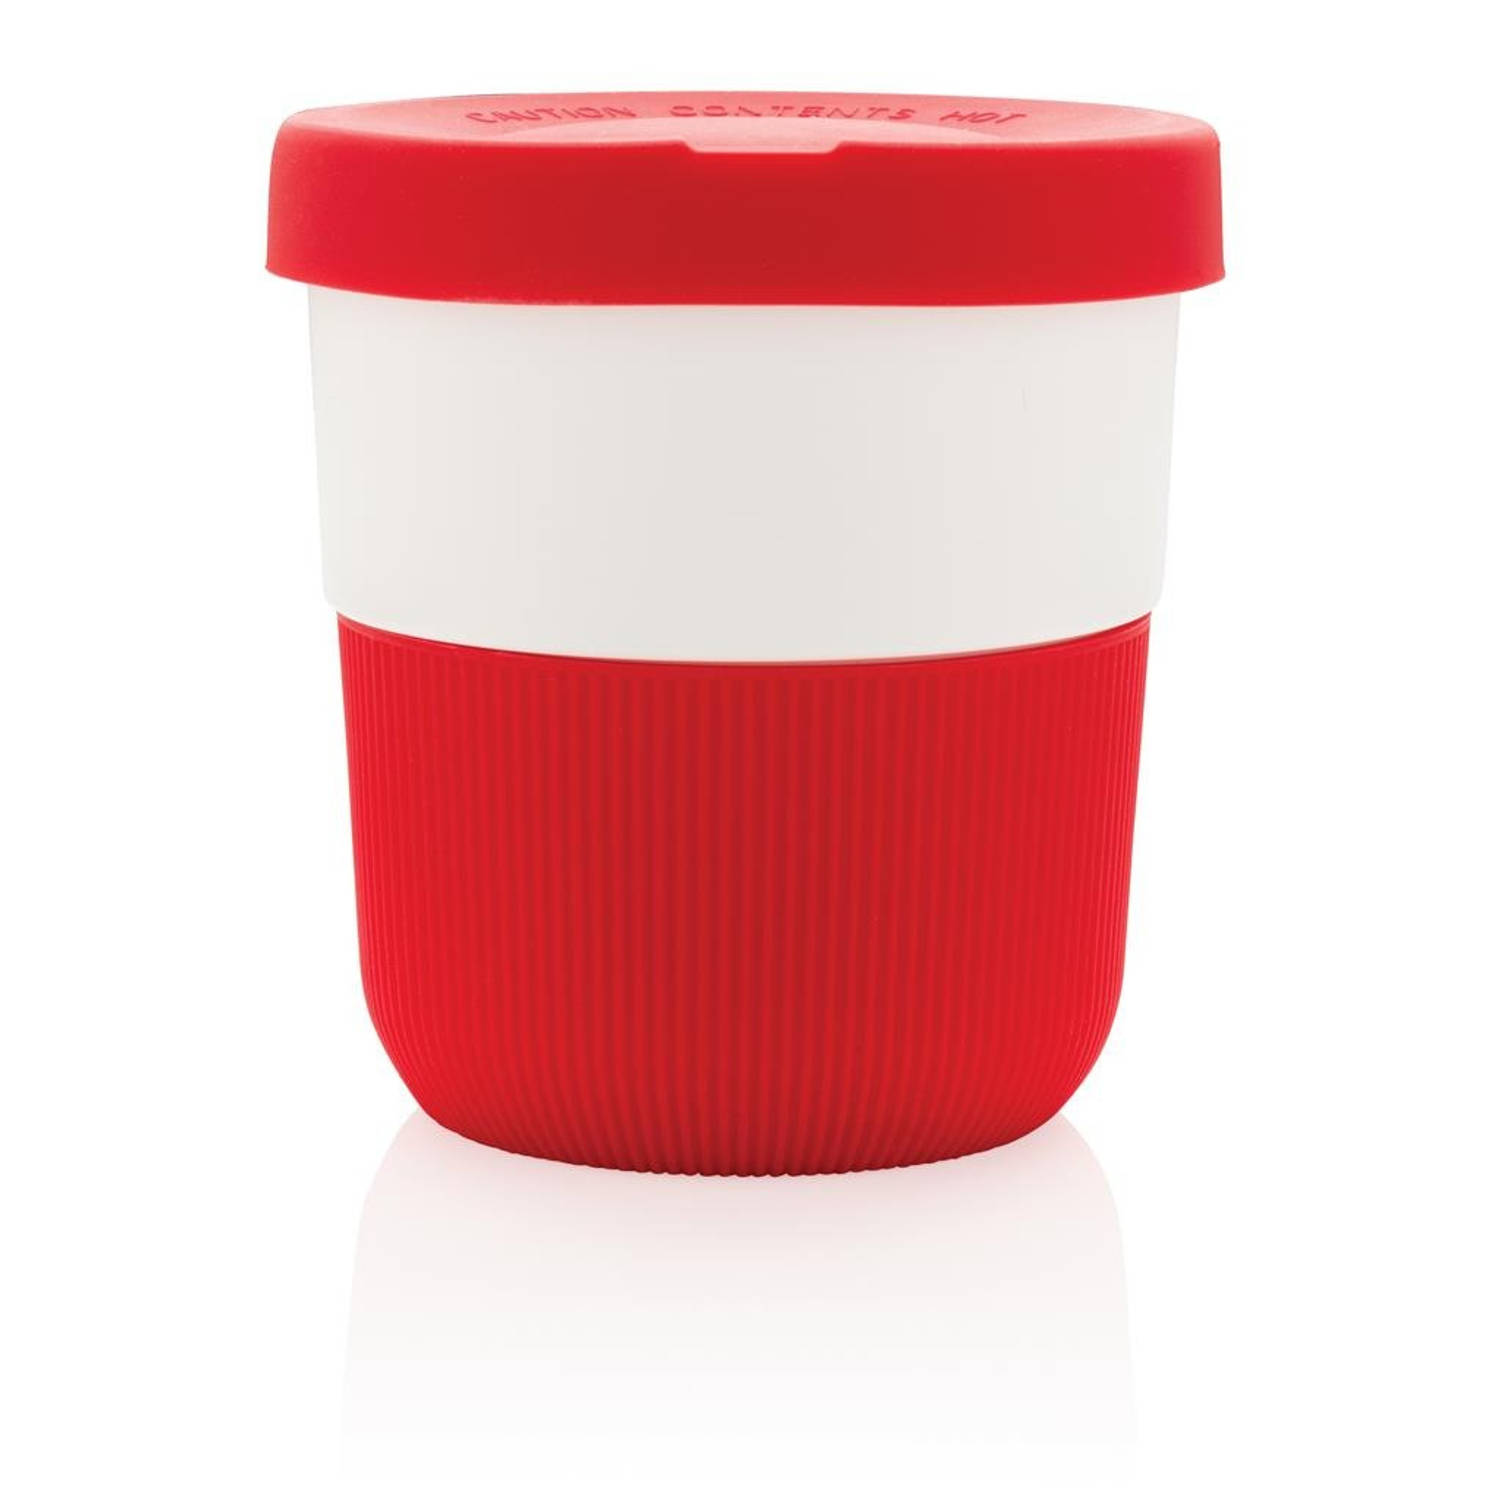 Proficiat pint verdediging XD Collection koffiebeker to go 8,6 cm plantaardig rood | Blokker